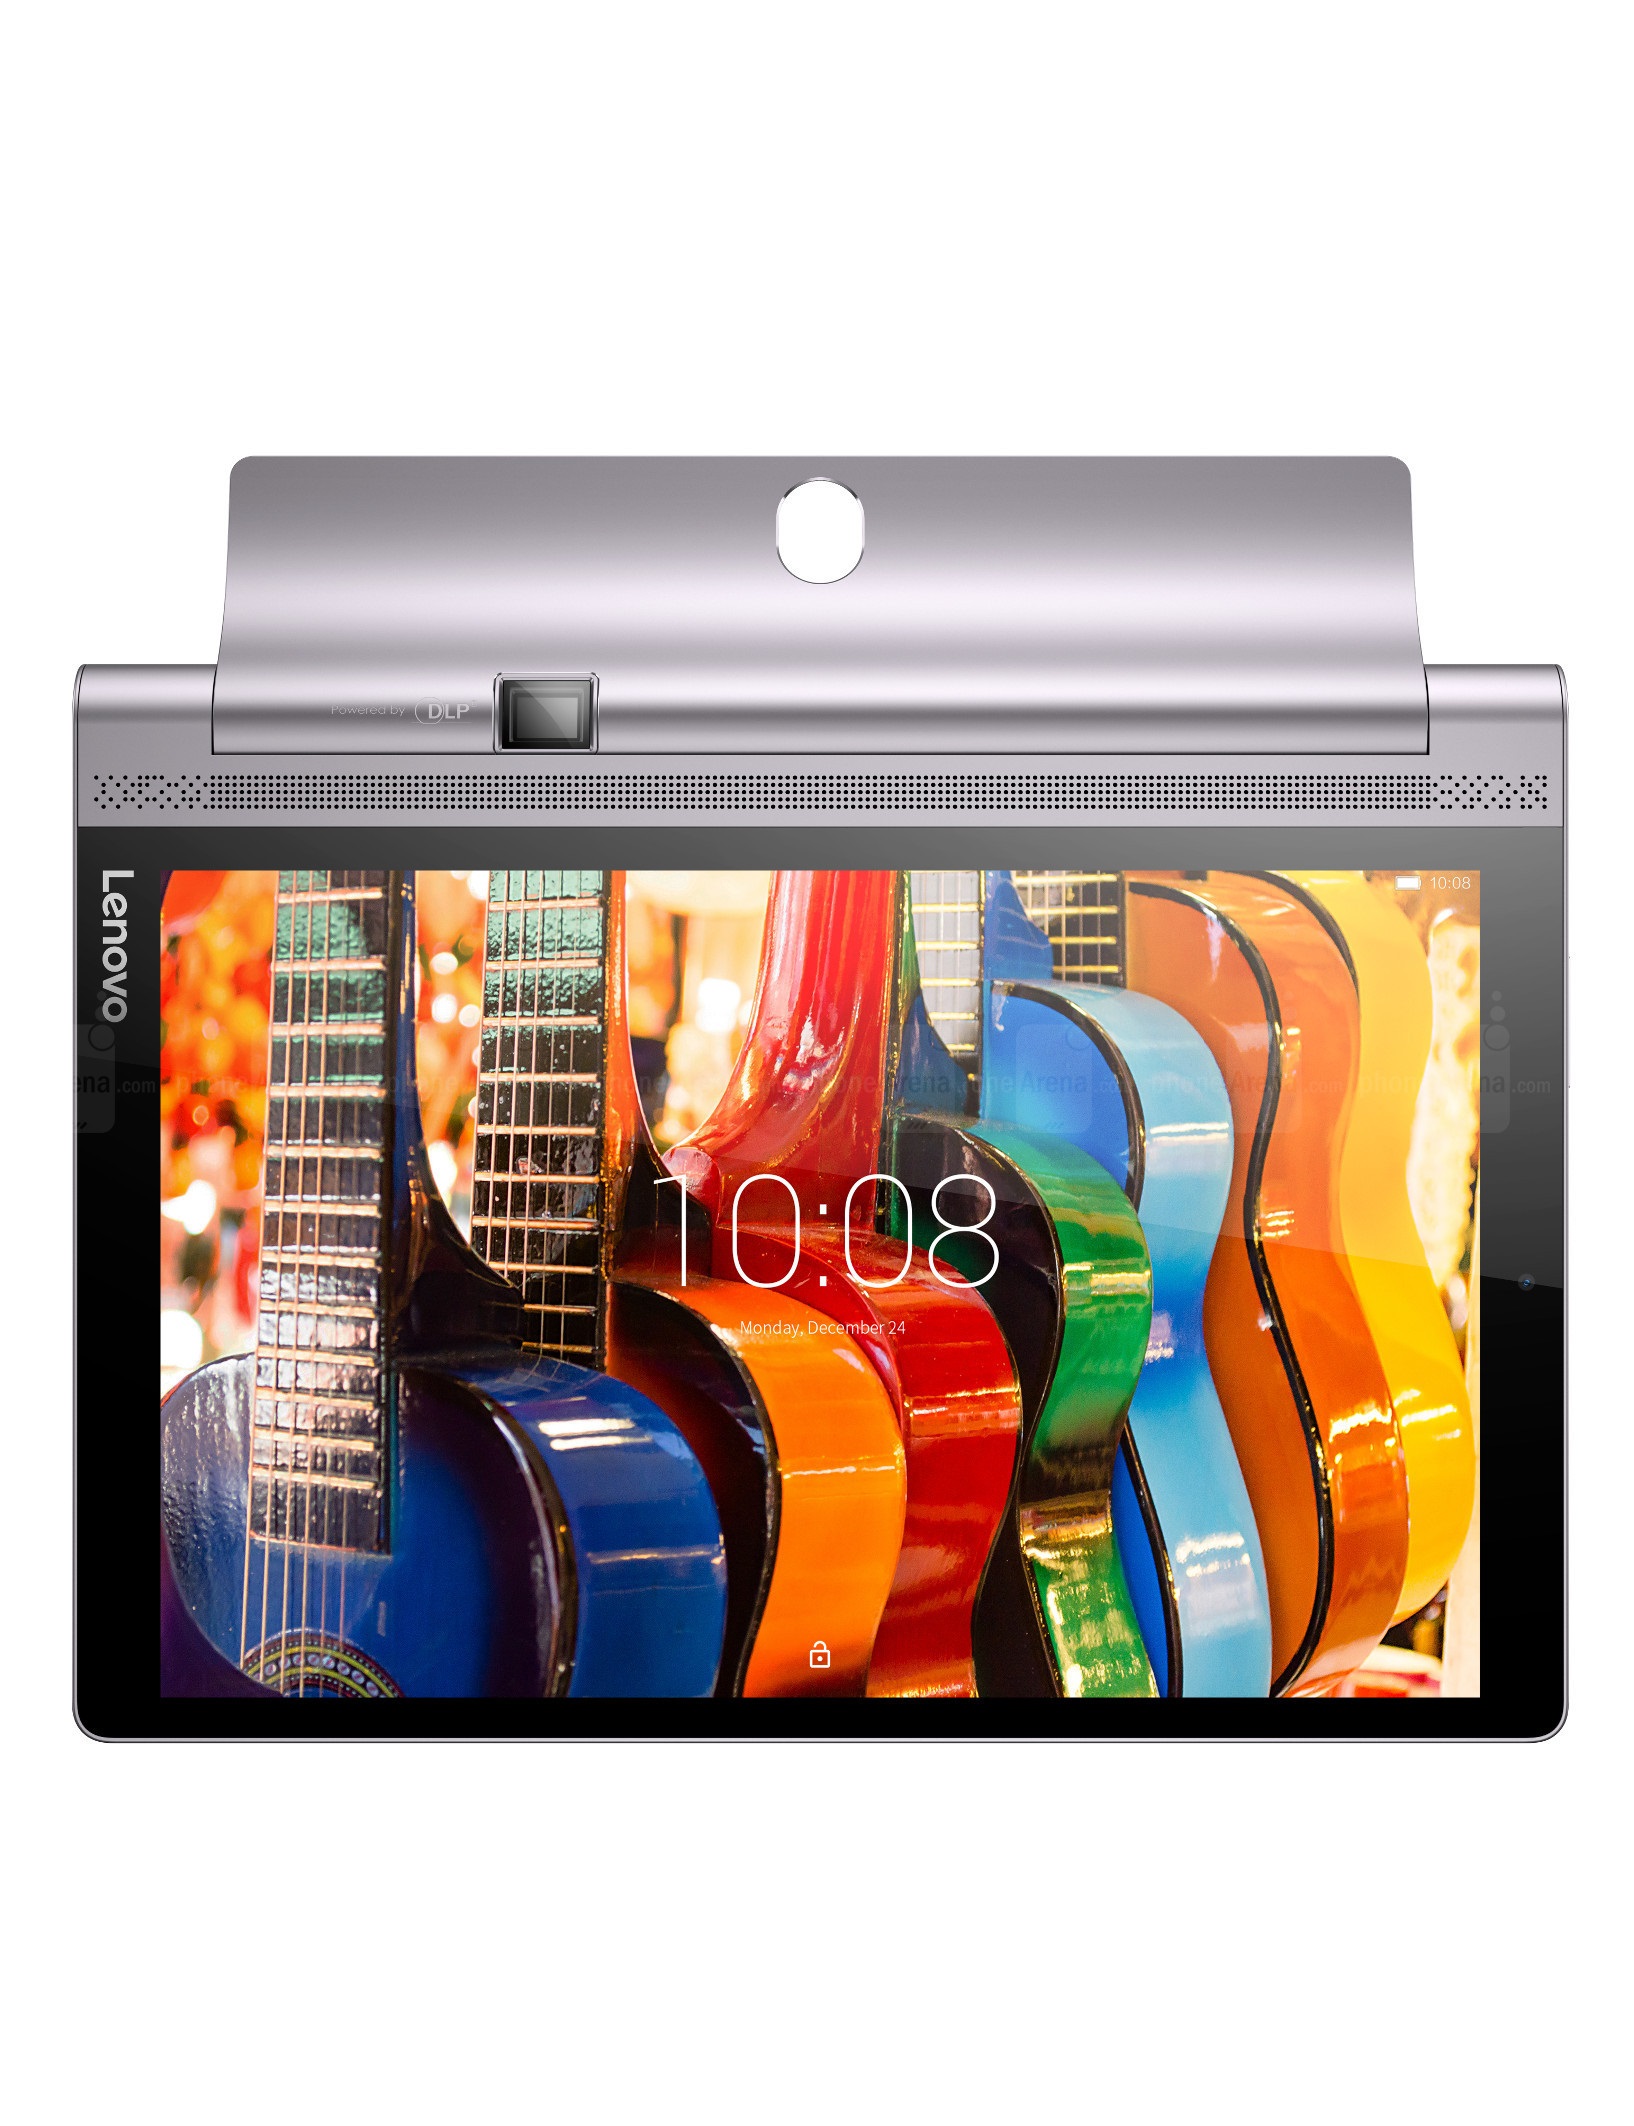 IFA 2015: با مشخصات فنی Lenovo YOGA Tab 3 Pro آشنا شوید - تکفارس 